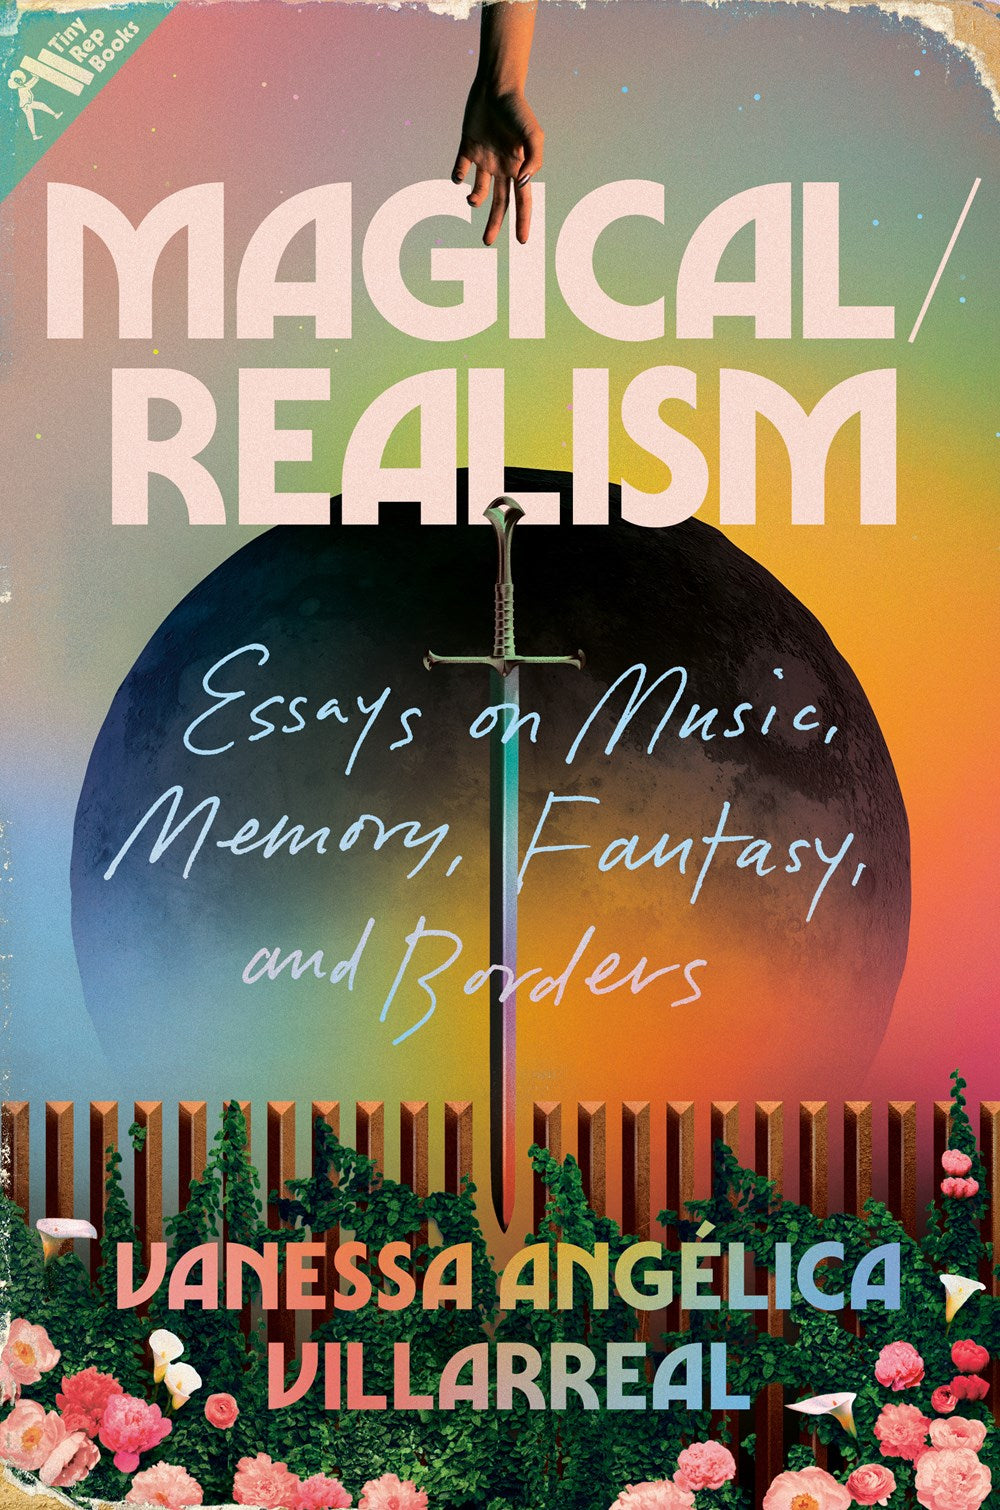 Magical/Realism: Essays on Music, Memory, Fantasy, and Borders Vanessa Angélica Villarreal (Hardcover) (PREORDER)